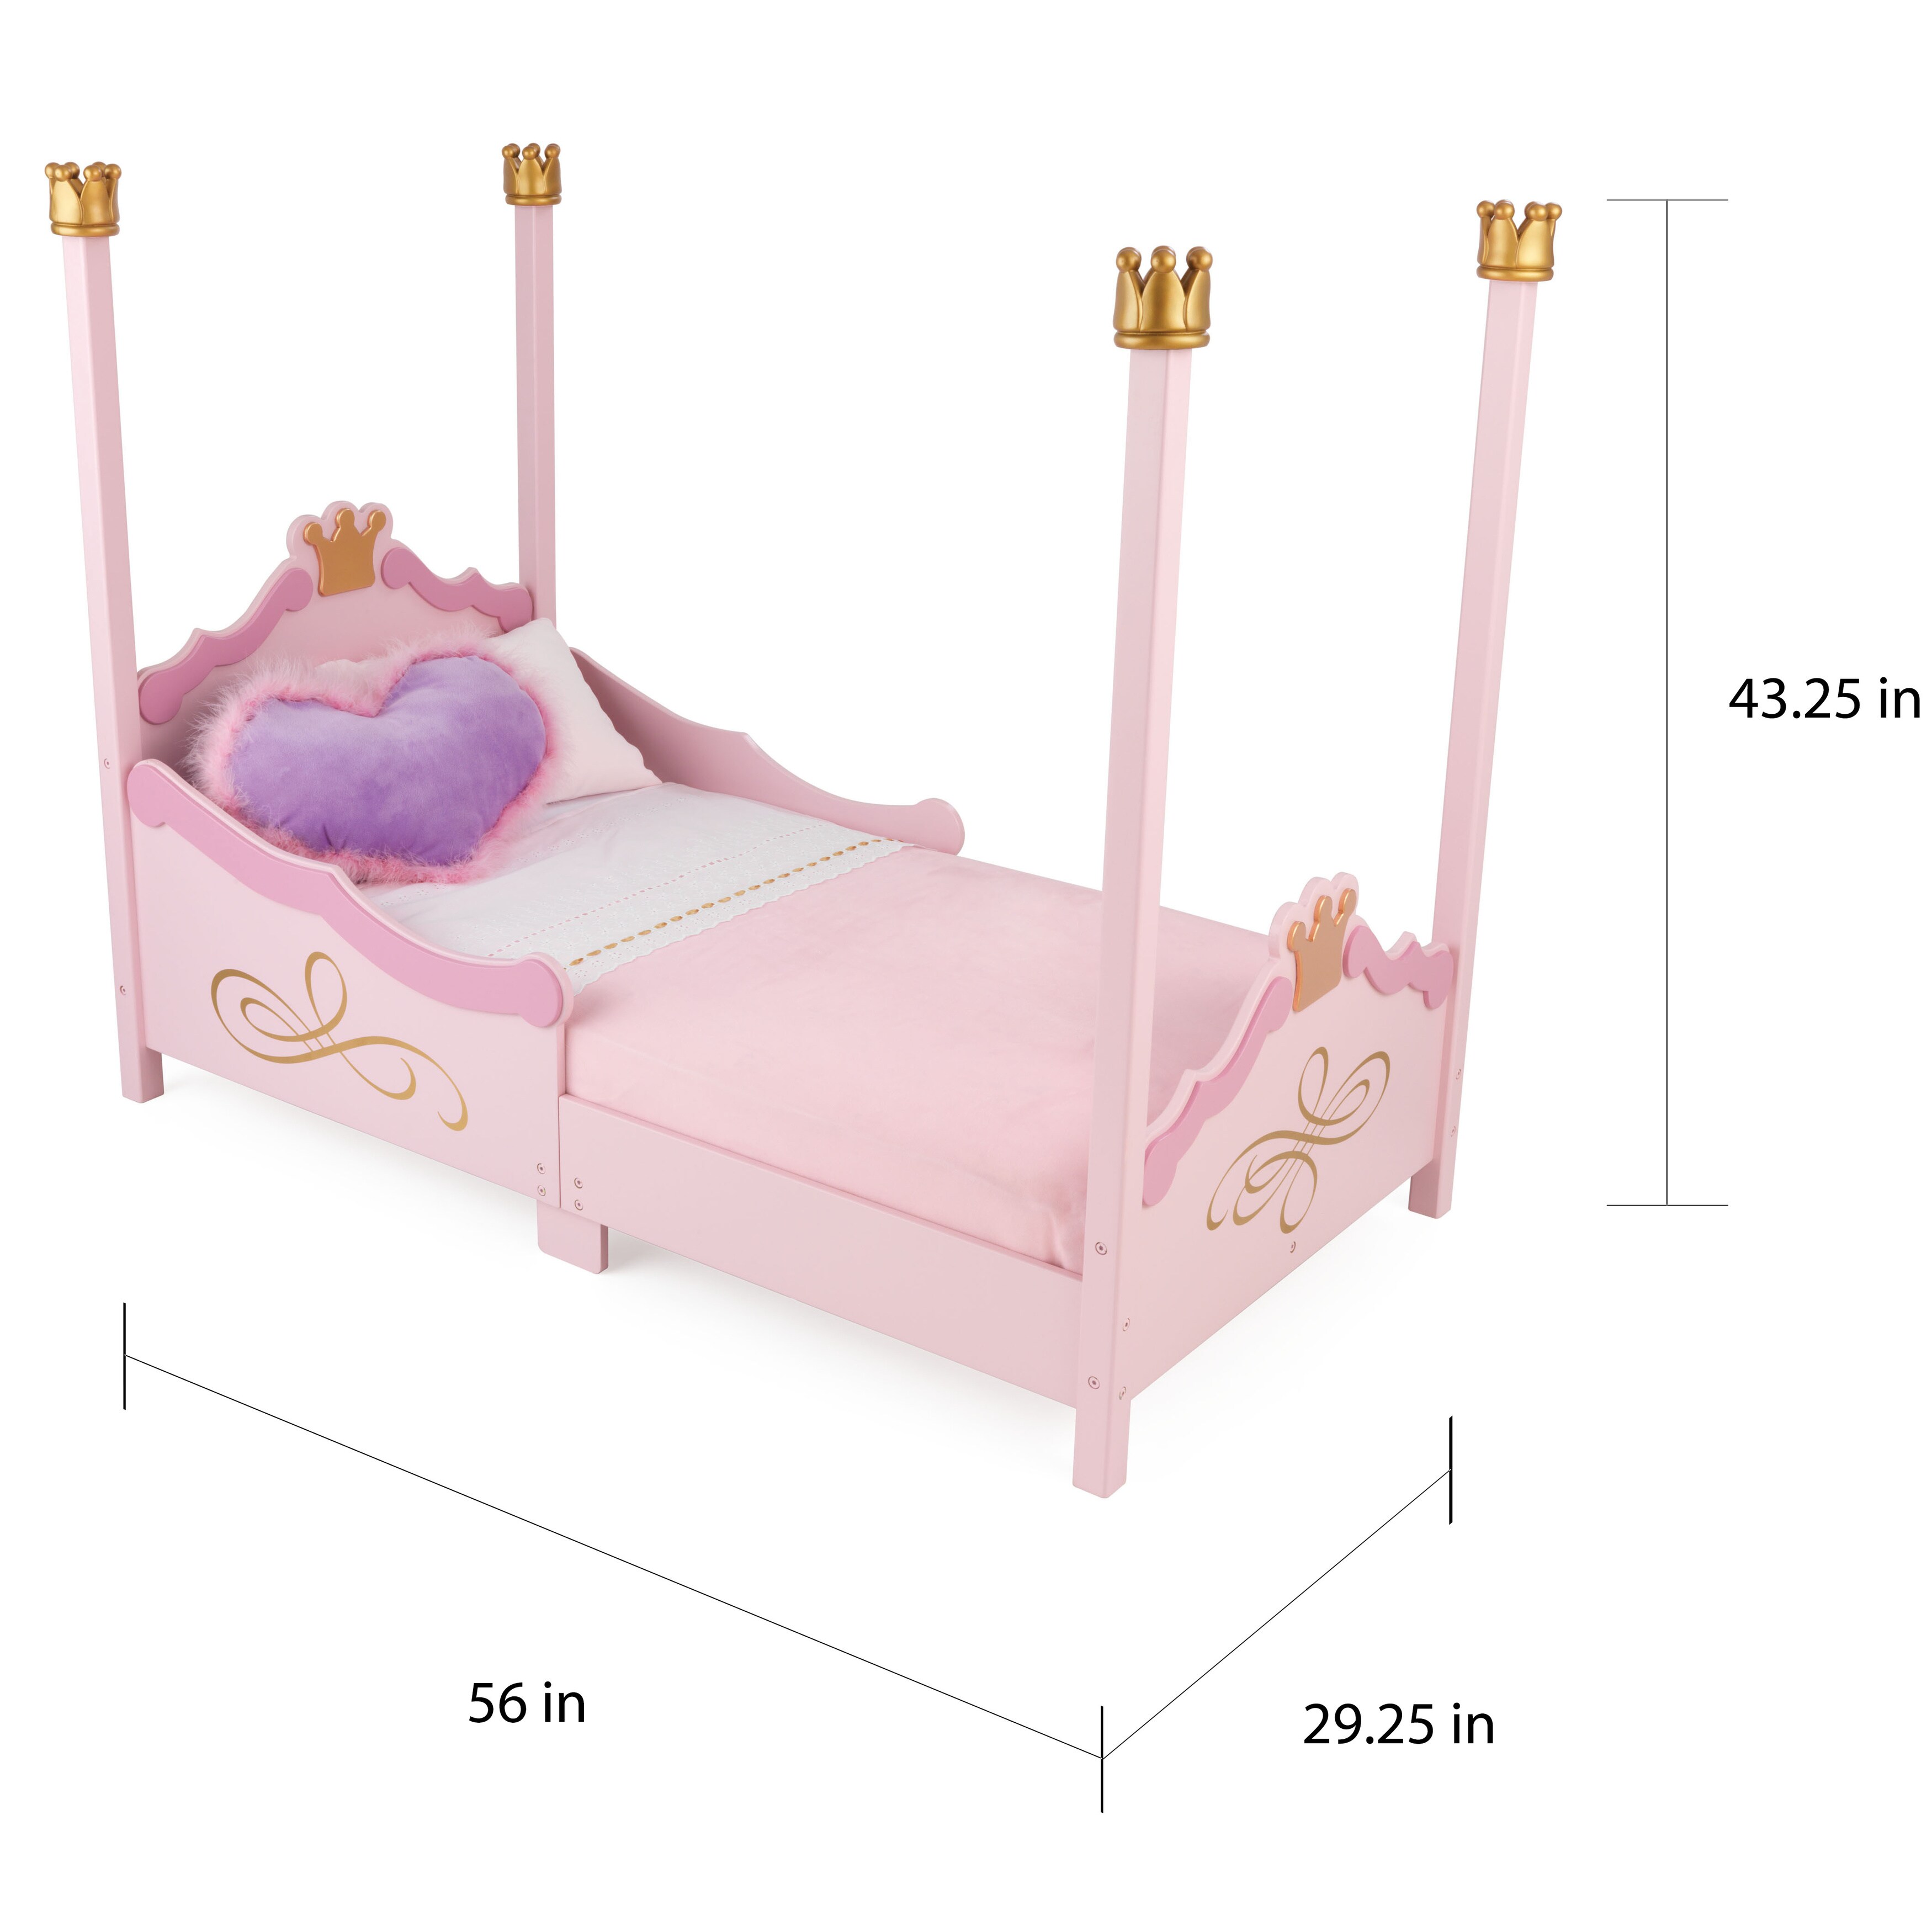 kidkraft princess bedroom set